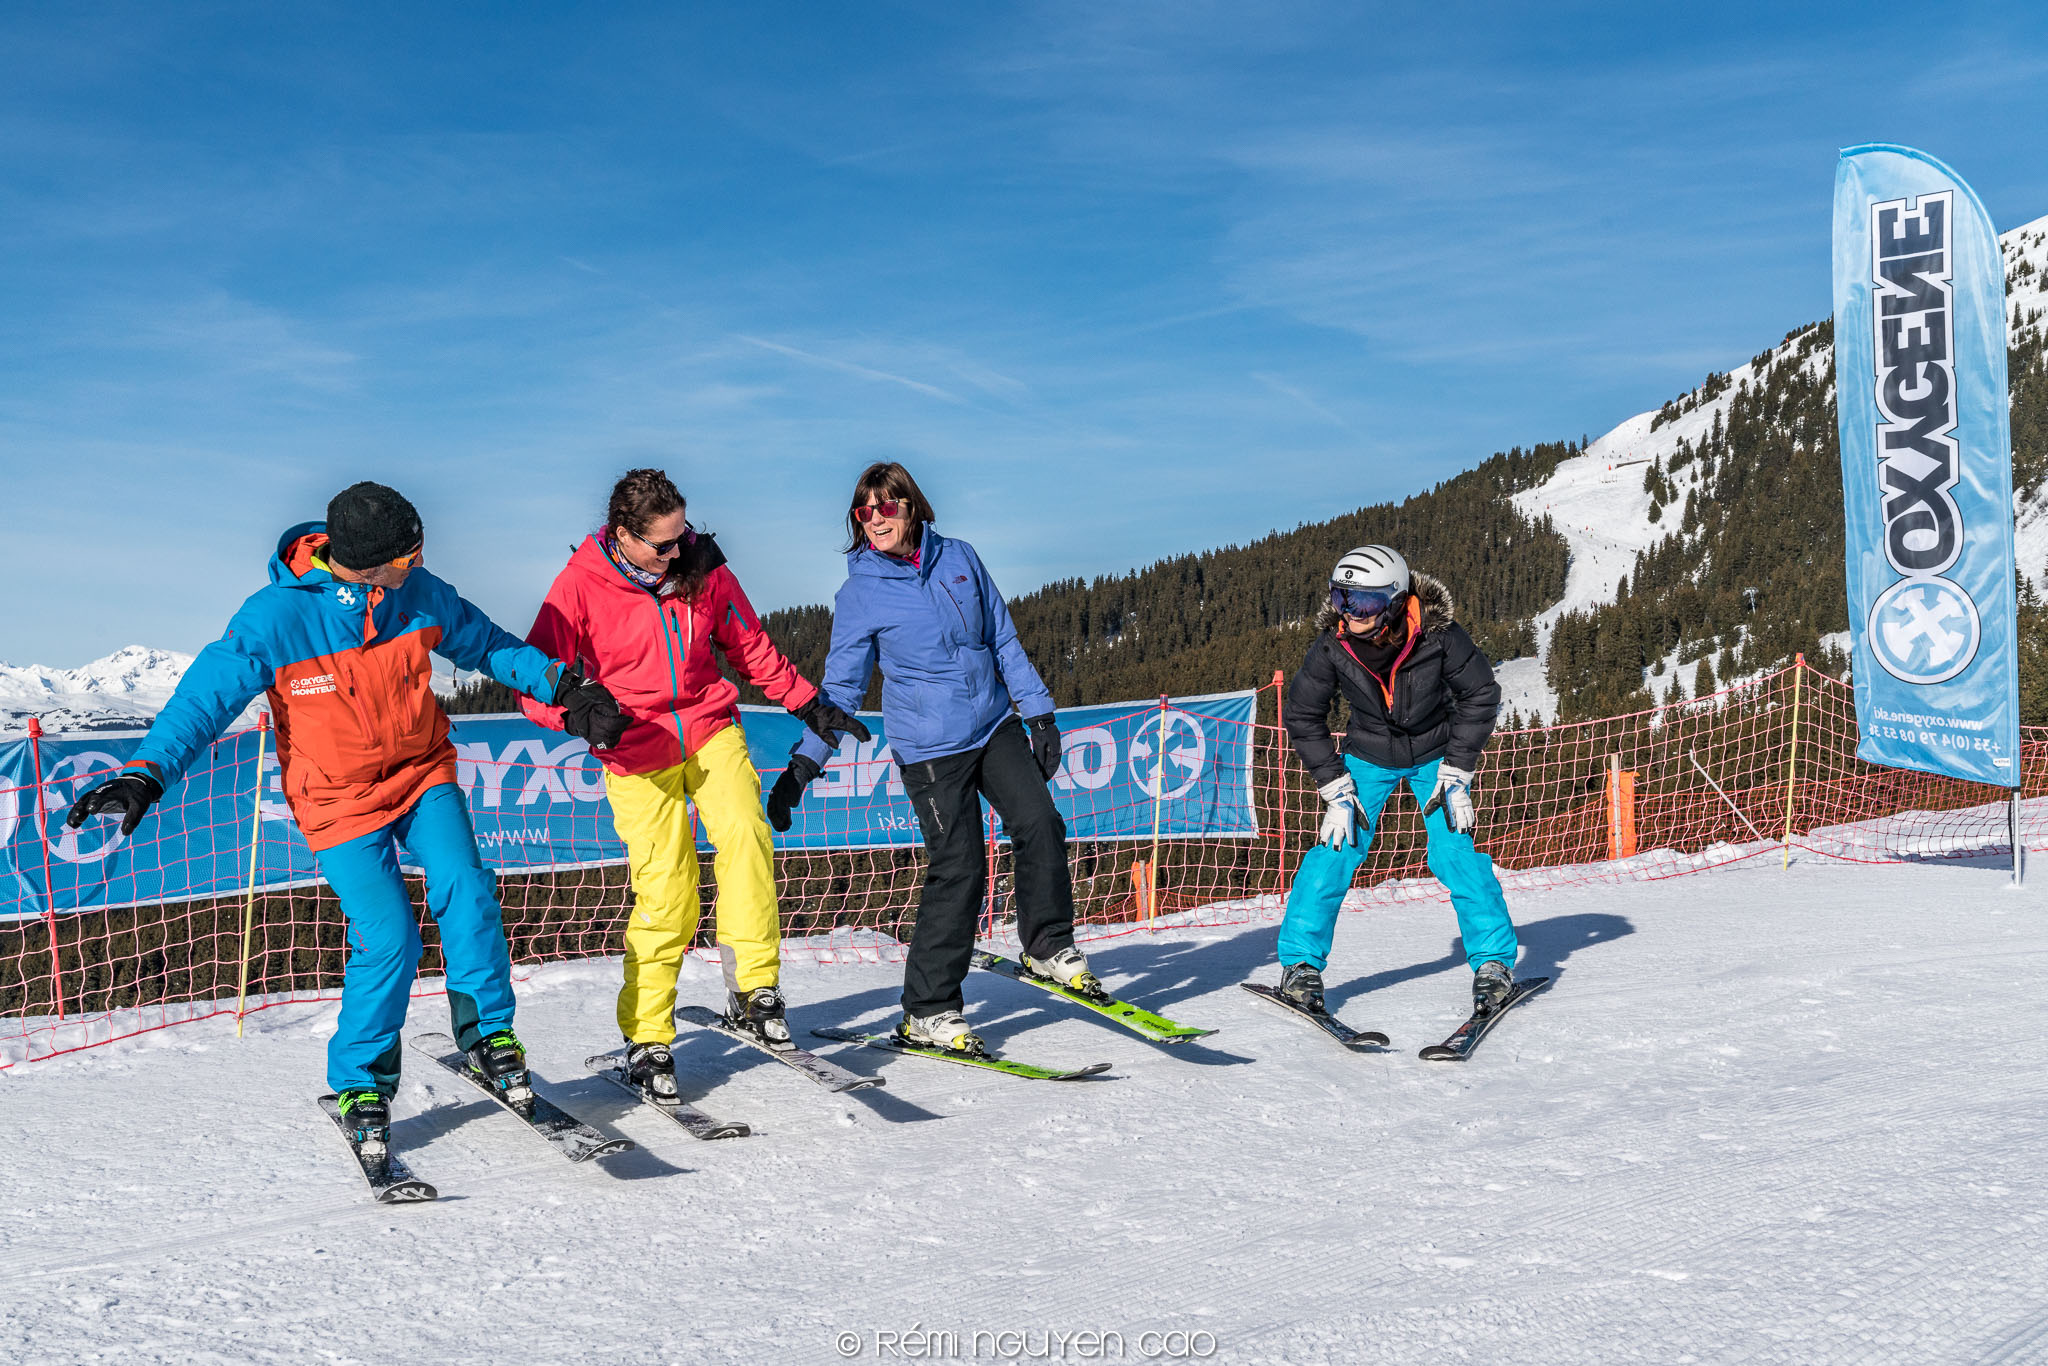 beginner skiers learning to ski